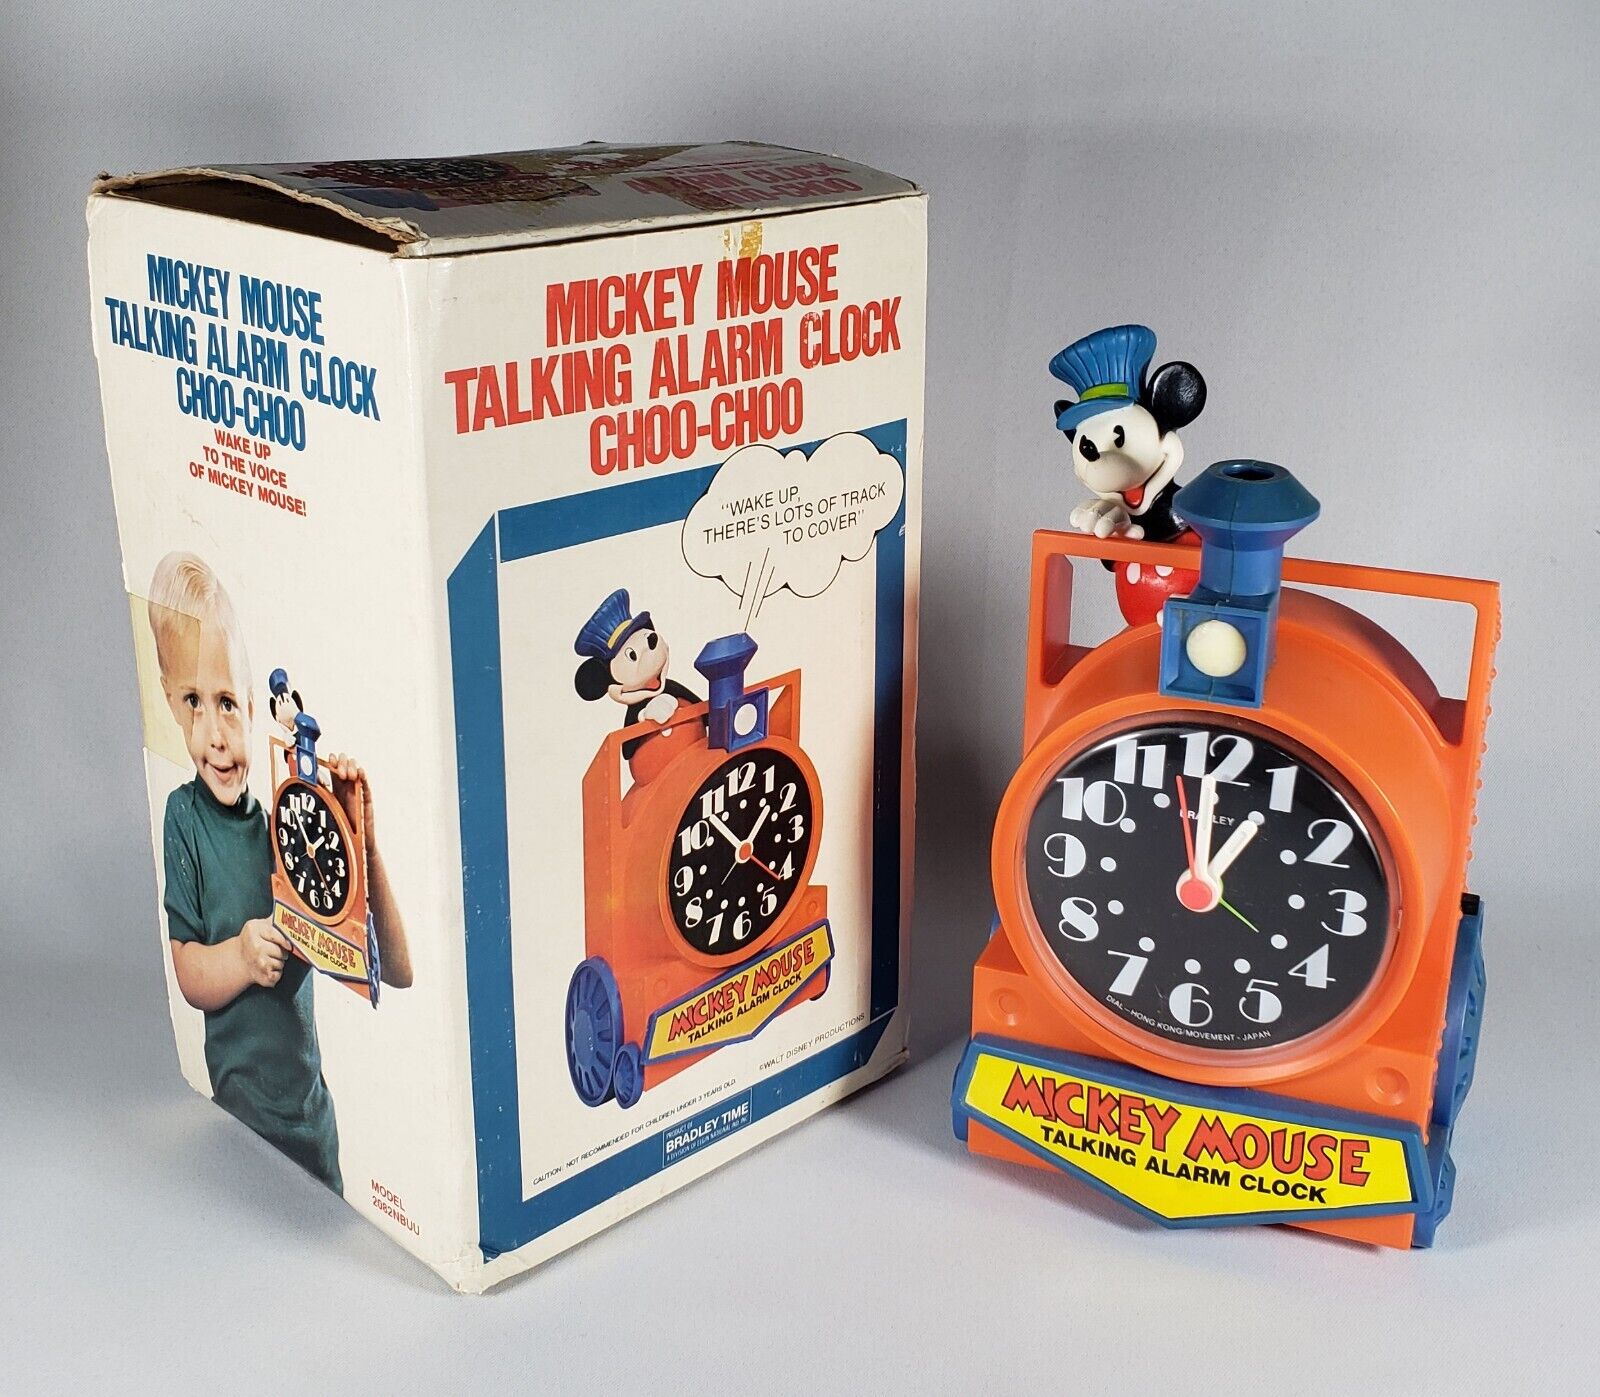 Mickey Mouse Bradley Talking Alarm Clock Choo-Choo Train in Original Box READ